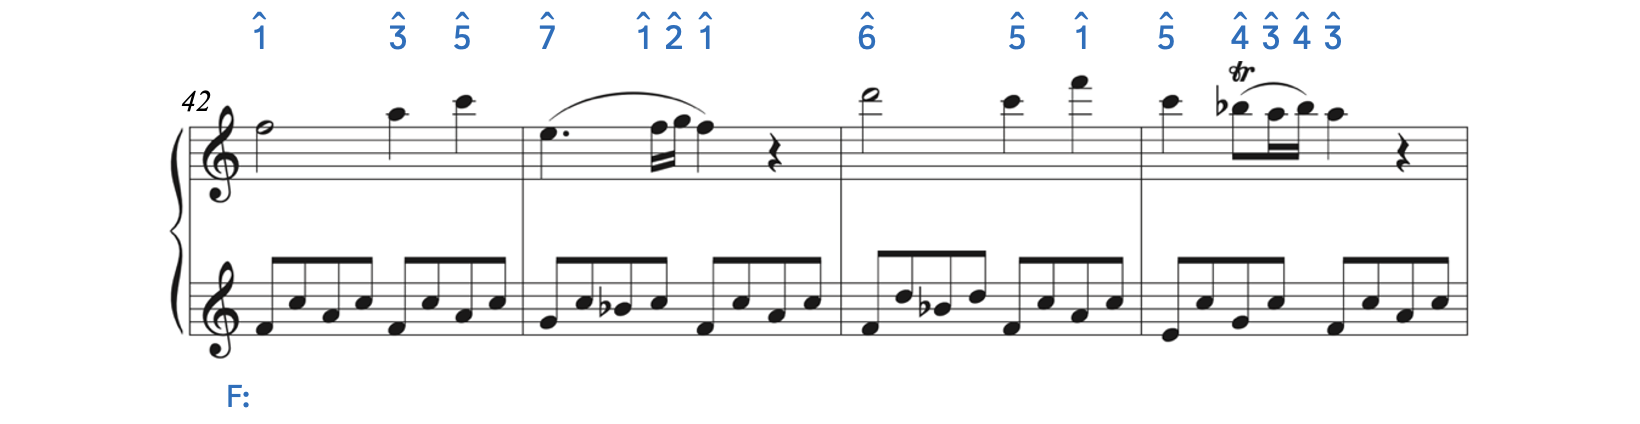 Mozart's Piano Sonata No. 16 in C Major, Kurshell 545, first movement - Allegro transposed to F major.